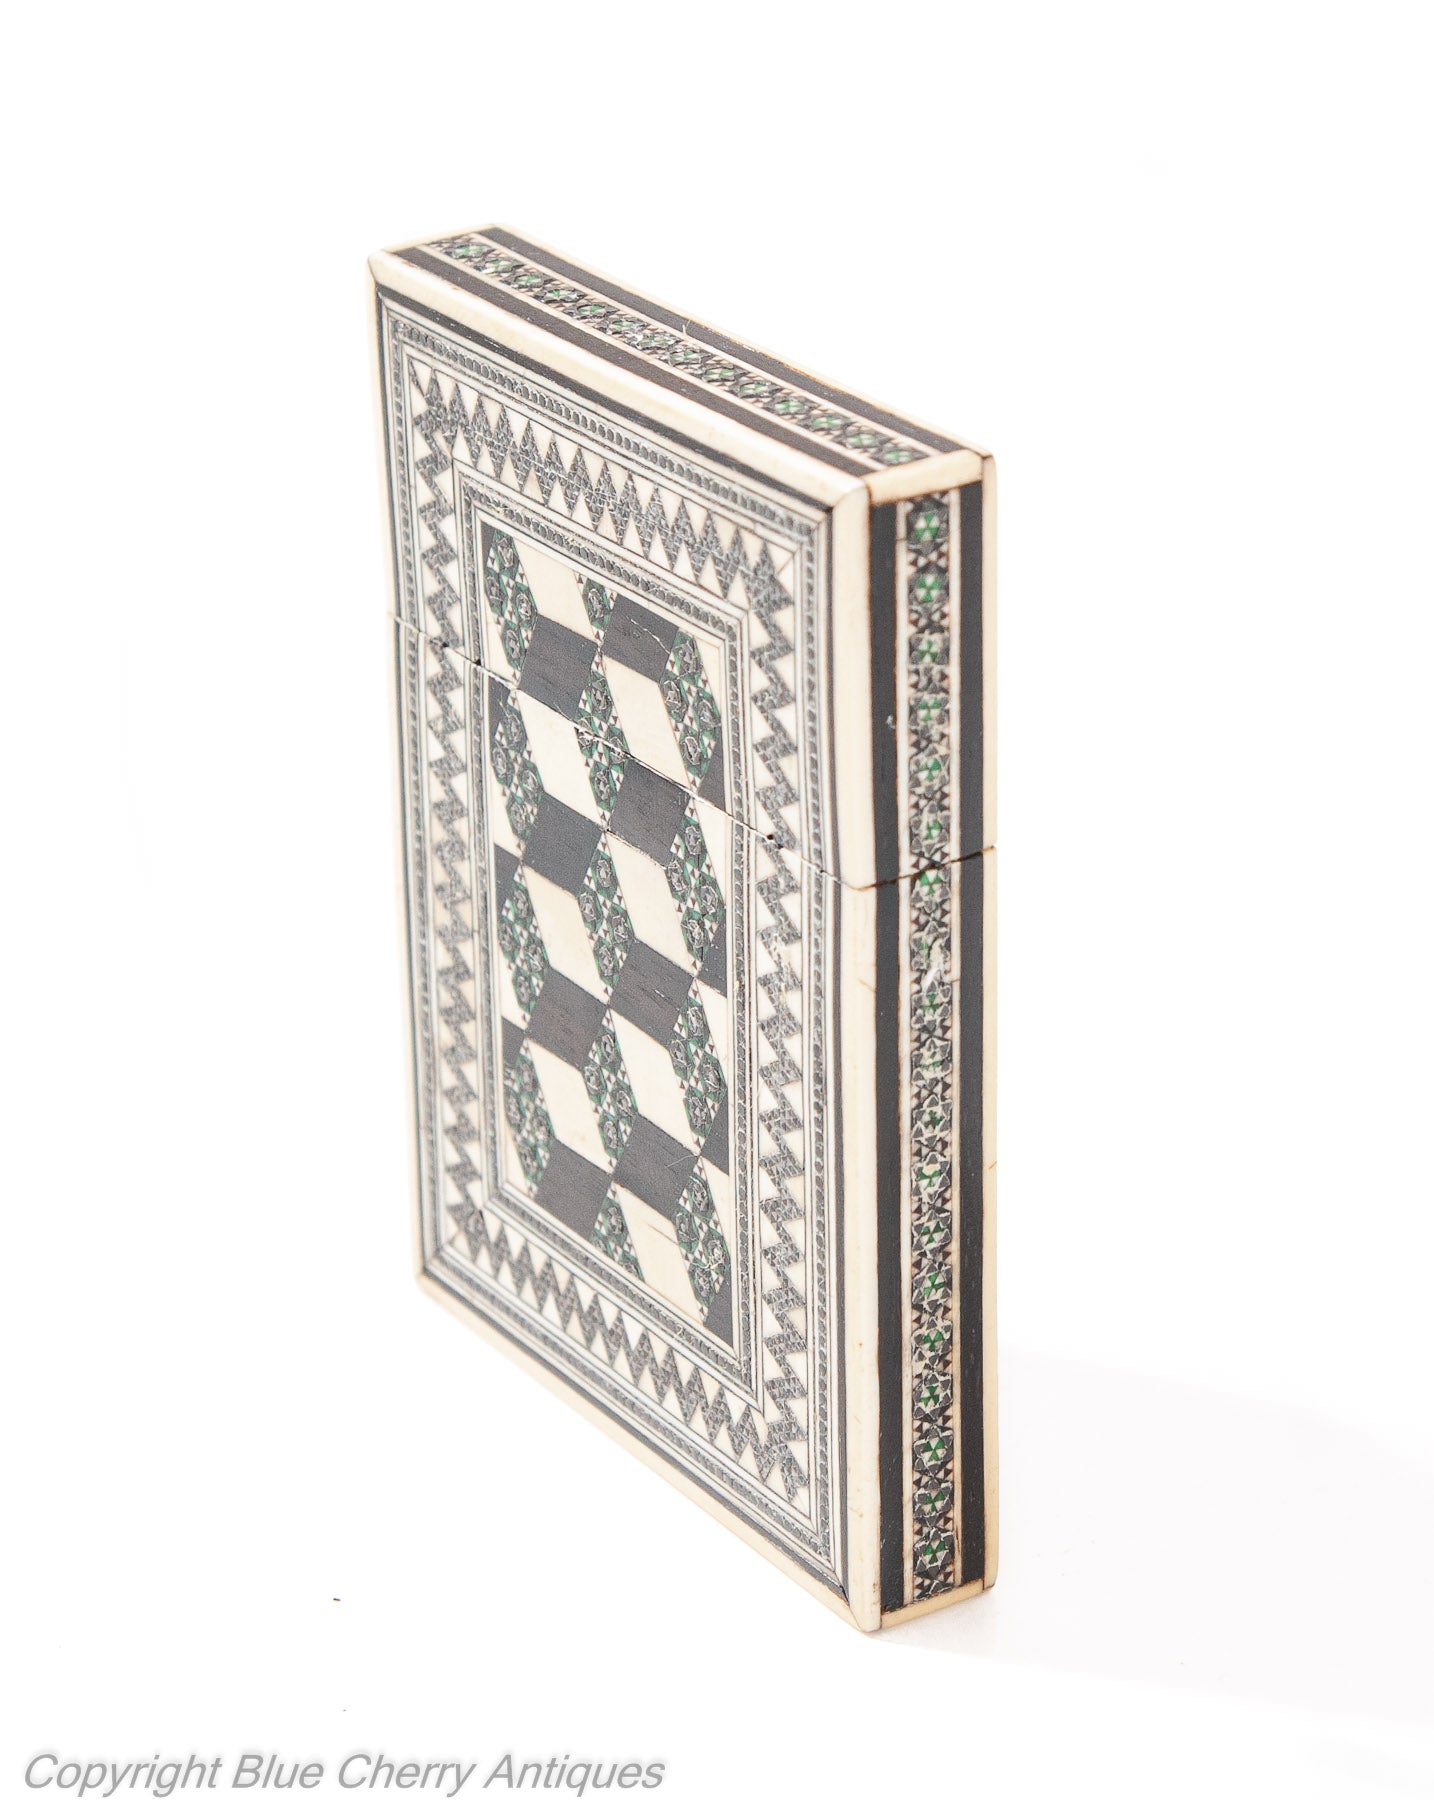 Antique Indian Vizagapatam Micro Mosaic and Sandalwood Card Case c1860 (Code 1937)